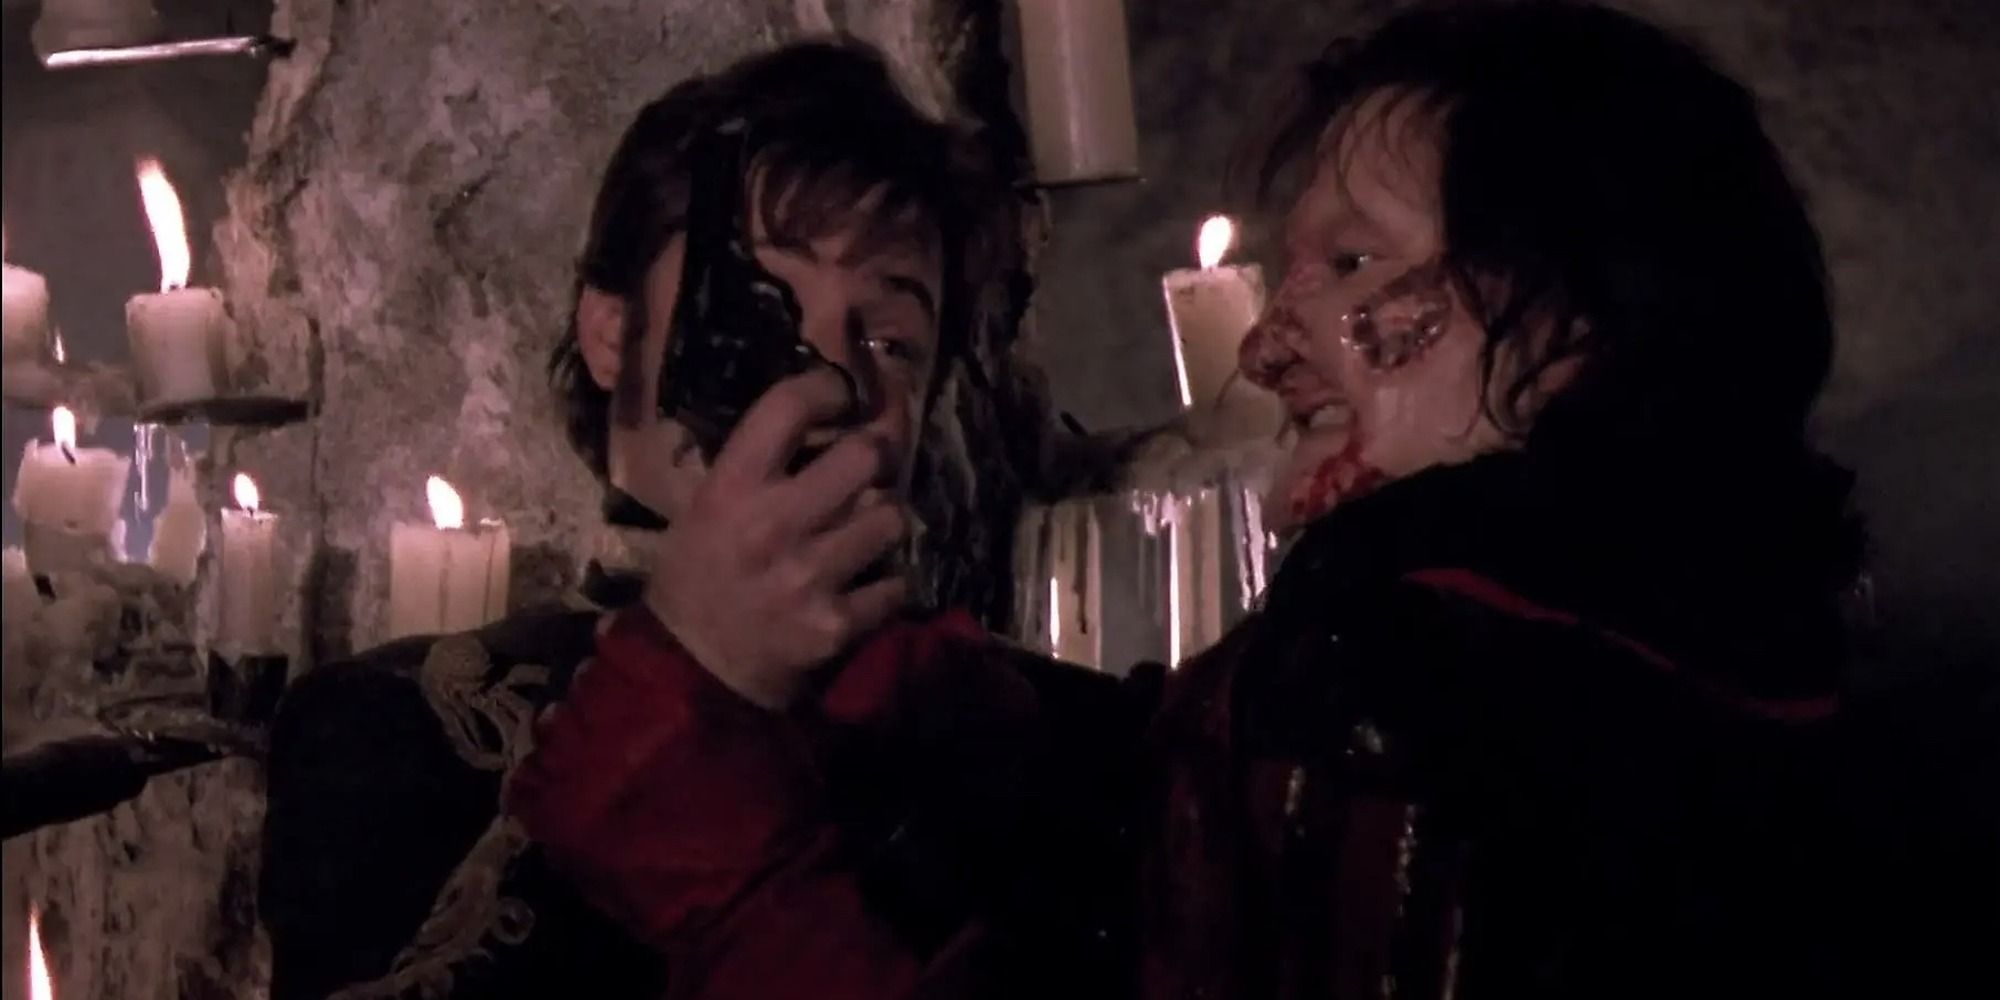 Richard and the Phantom fight over the gun in 1989's Phantom of the Opera